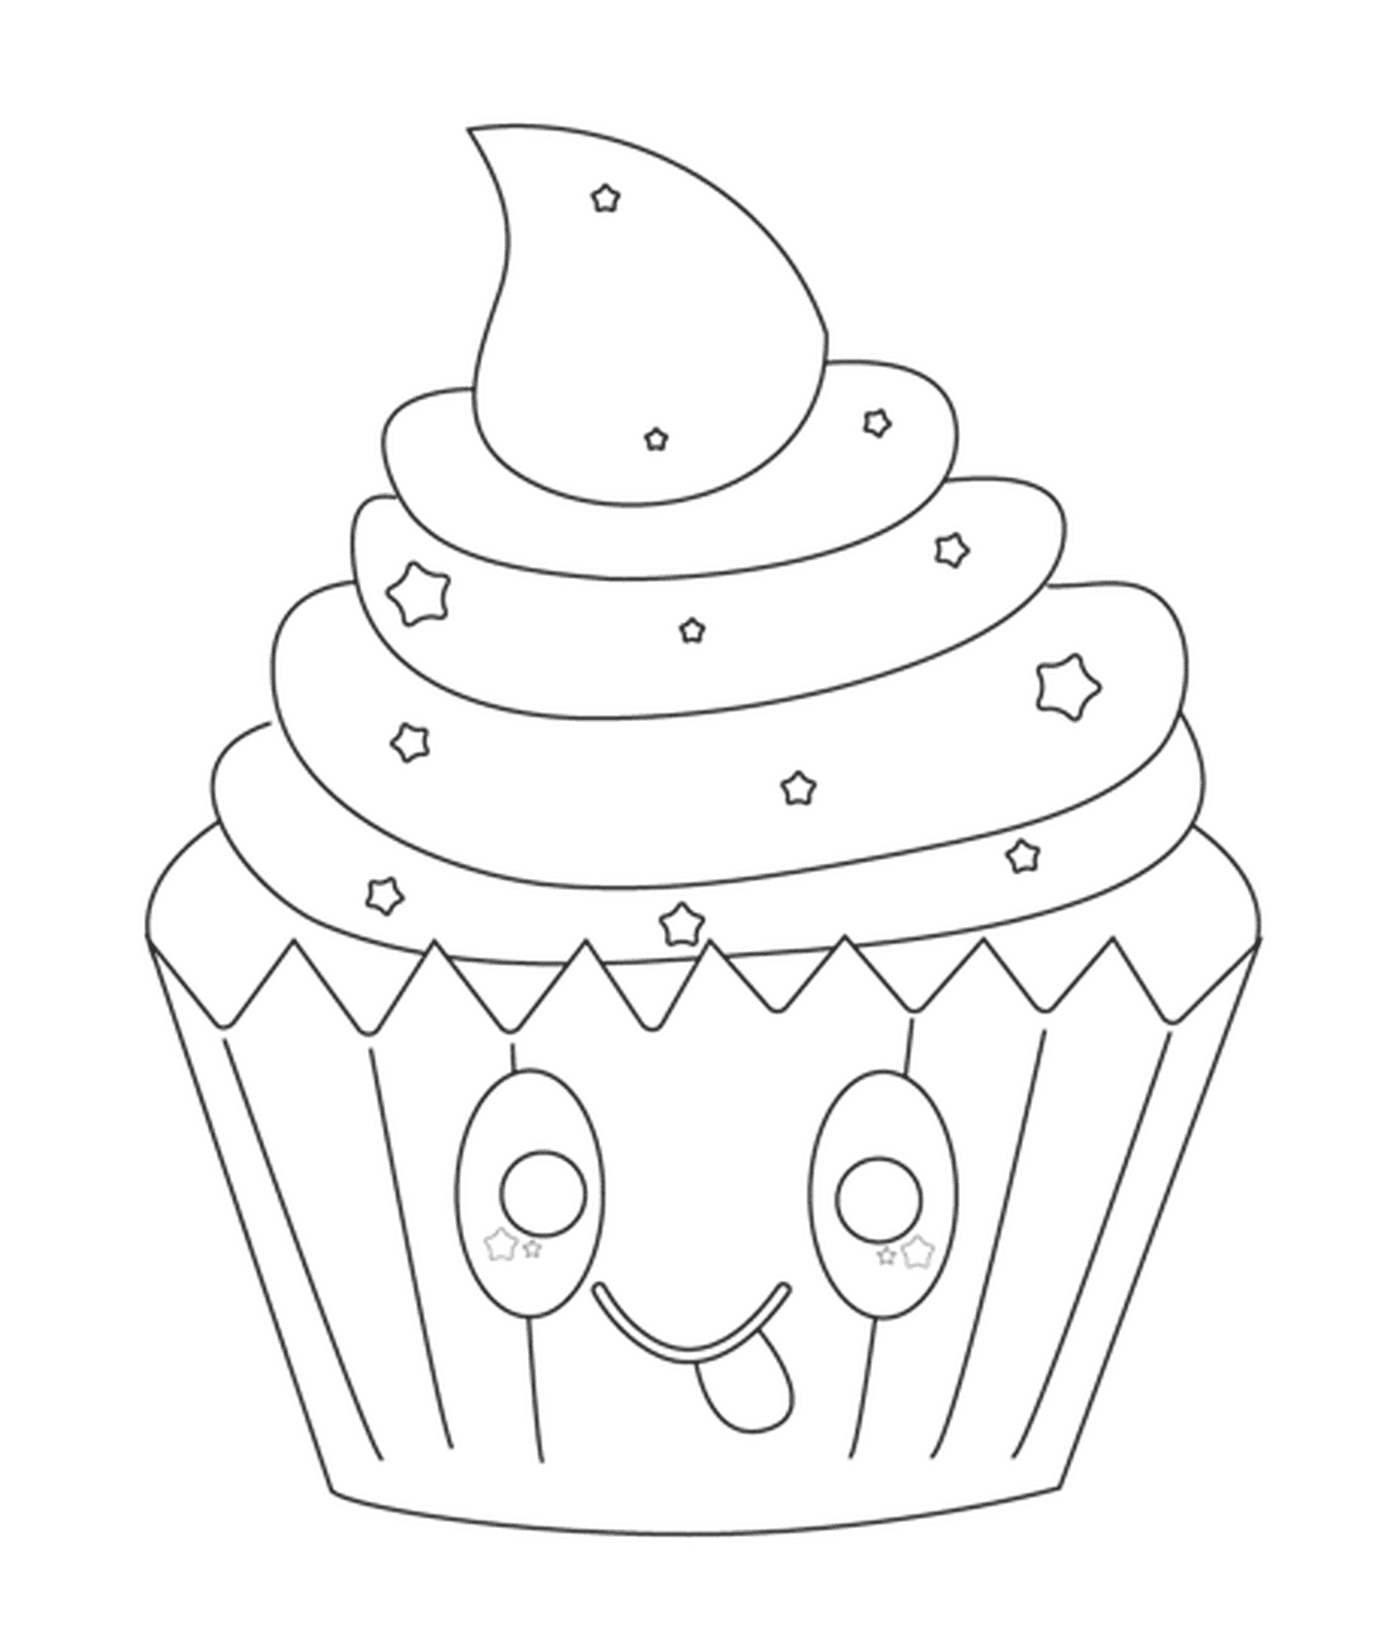  A kawaii cupcake 